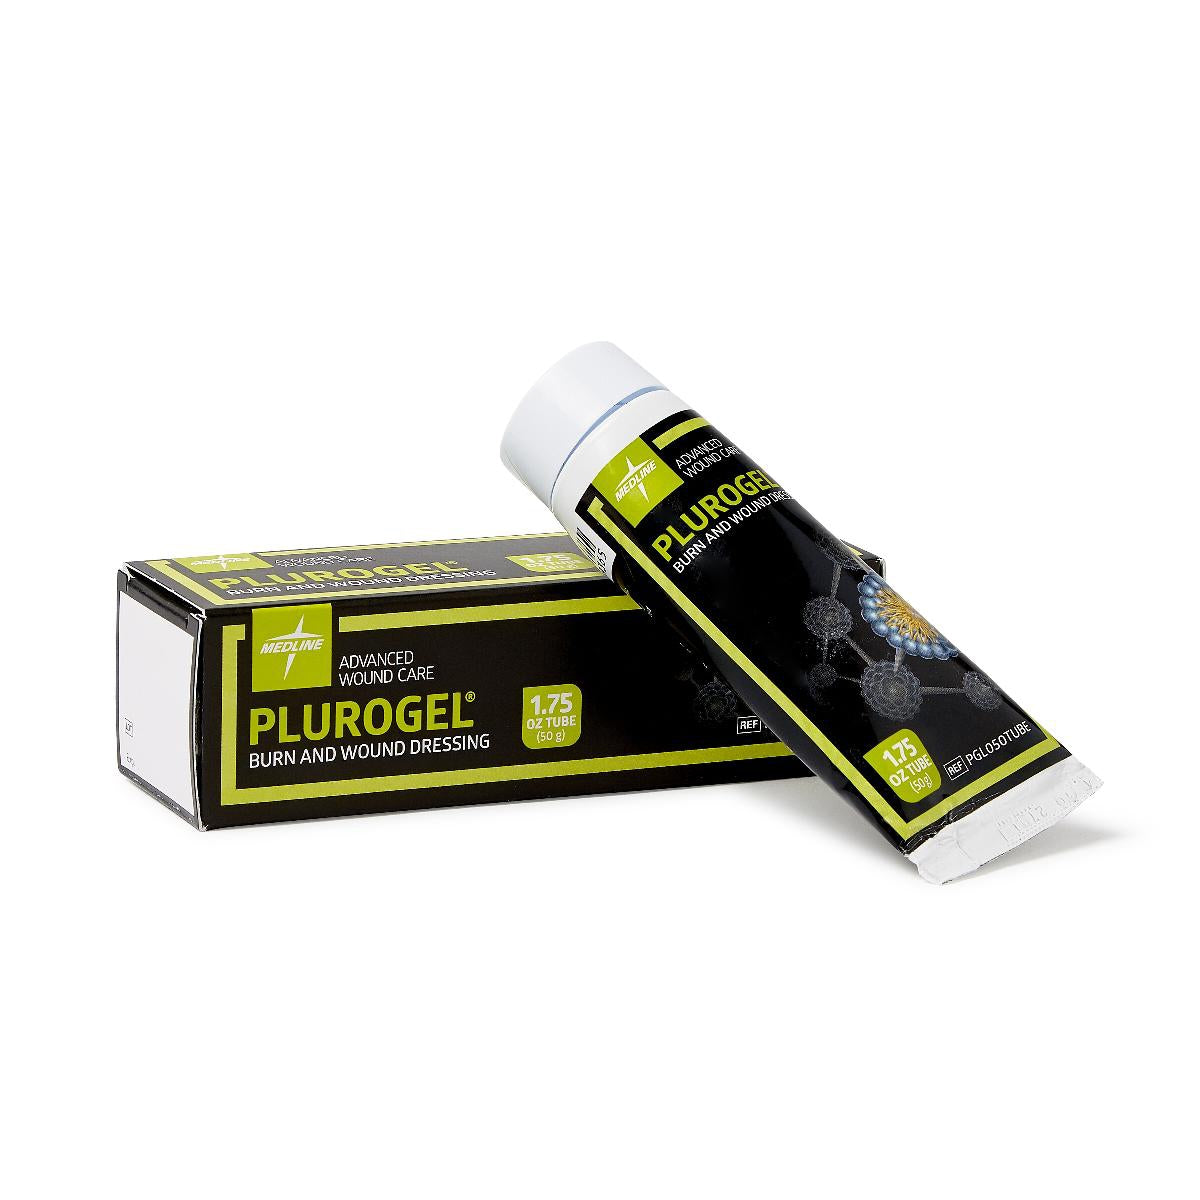 Medline PluroGel® Wound and Burn Dressing - 1.75 oz. Tube, NonSterile